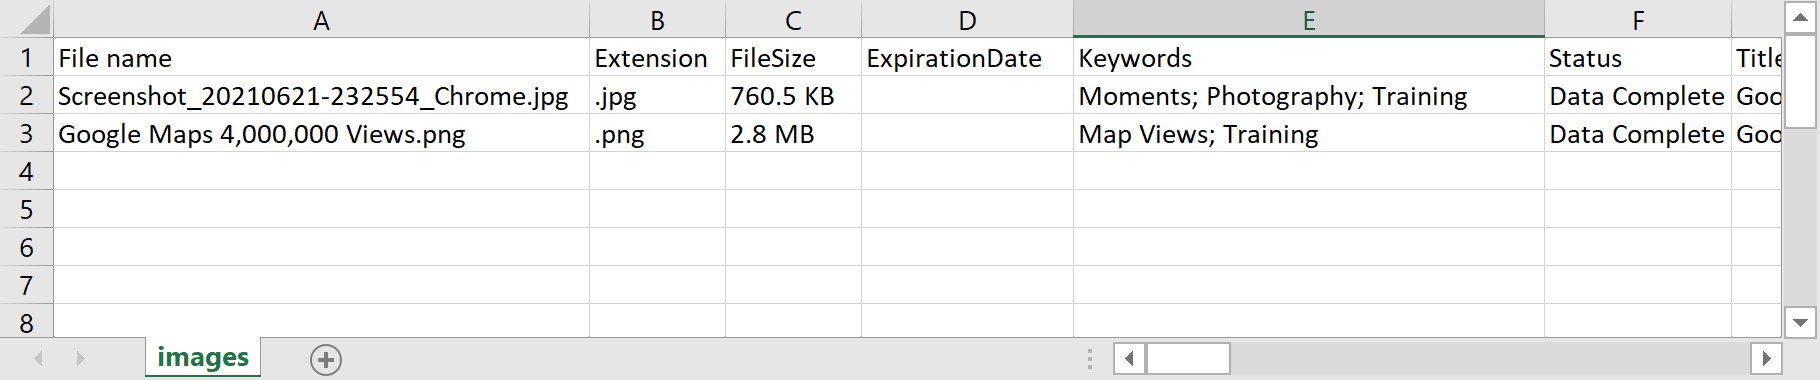 Download Multiple Files - CSV Sample